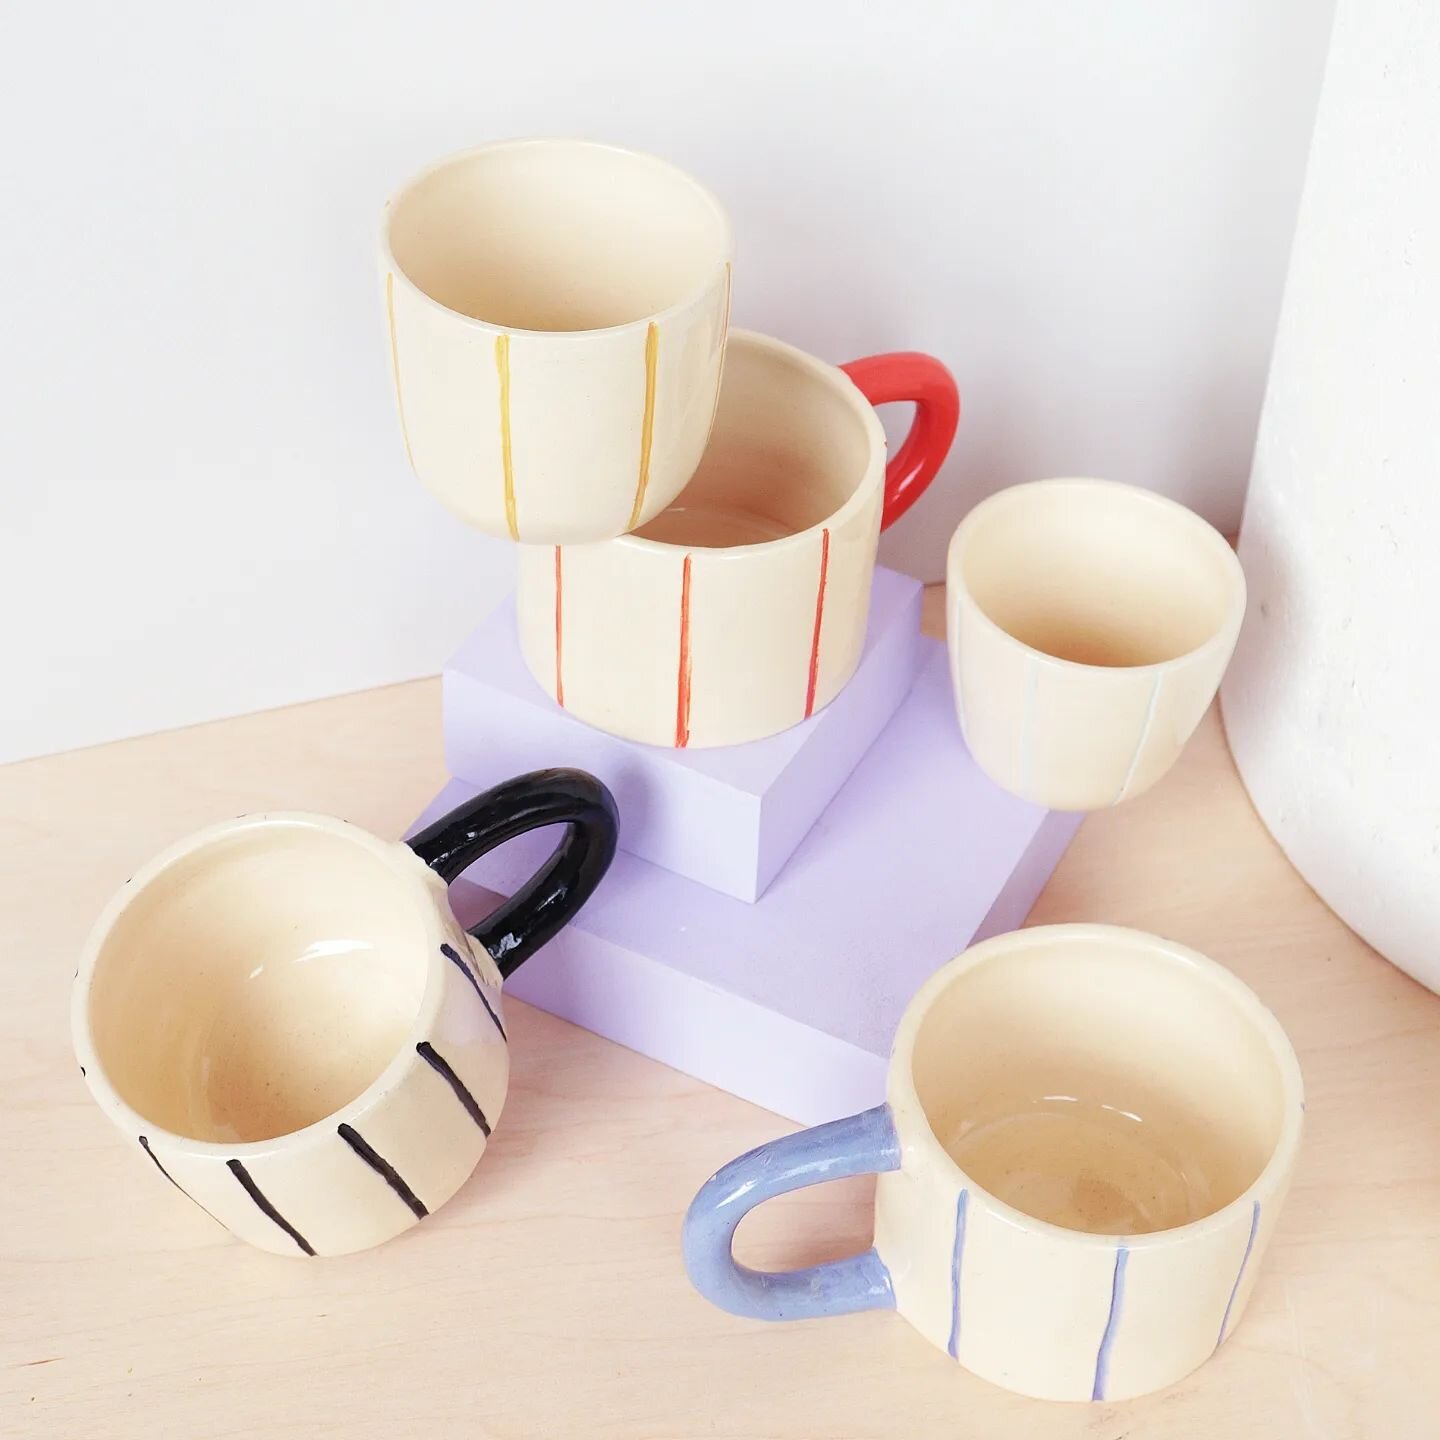 Stripes mugs! 🌟 
.
.
.
#modernpottery #ceramicmugs #colorfulceramics #madebyhand #ceramickitchenware #potterylove